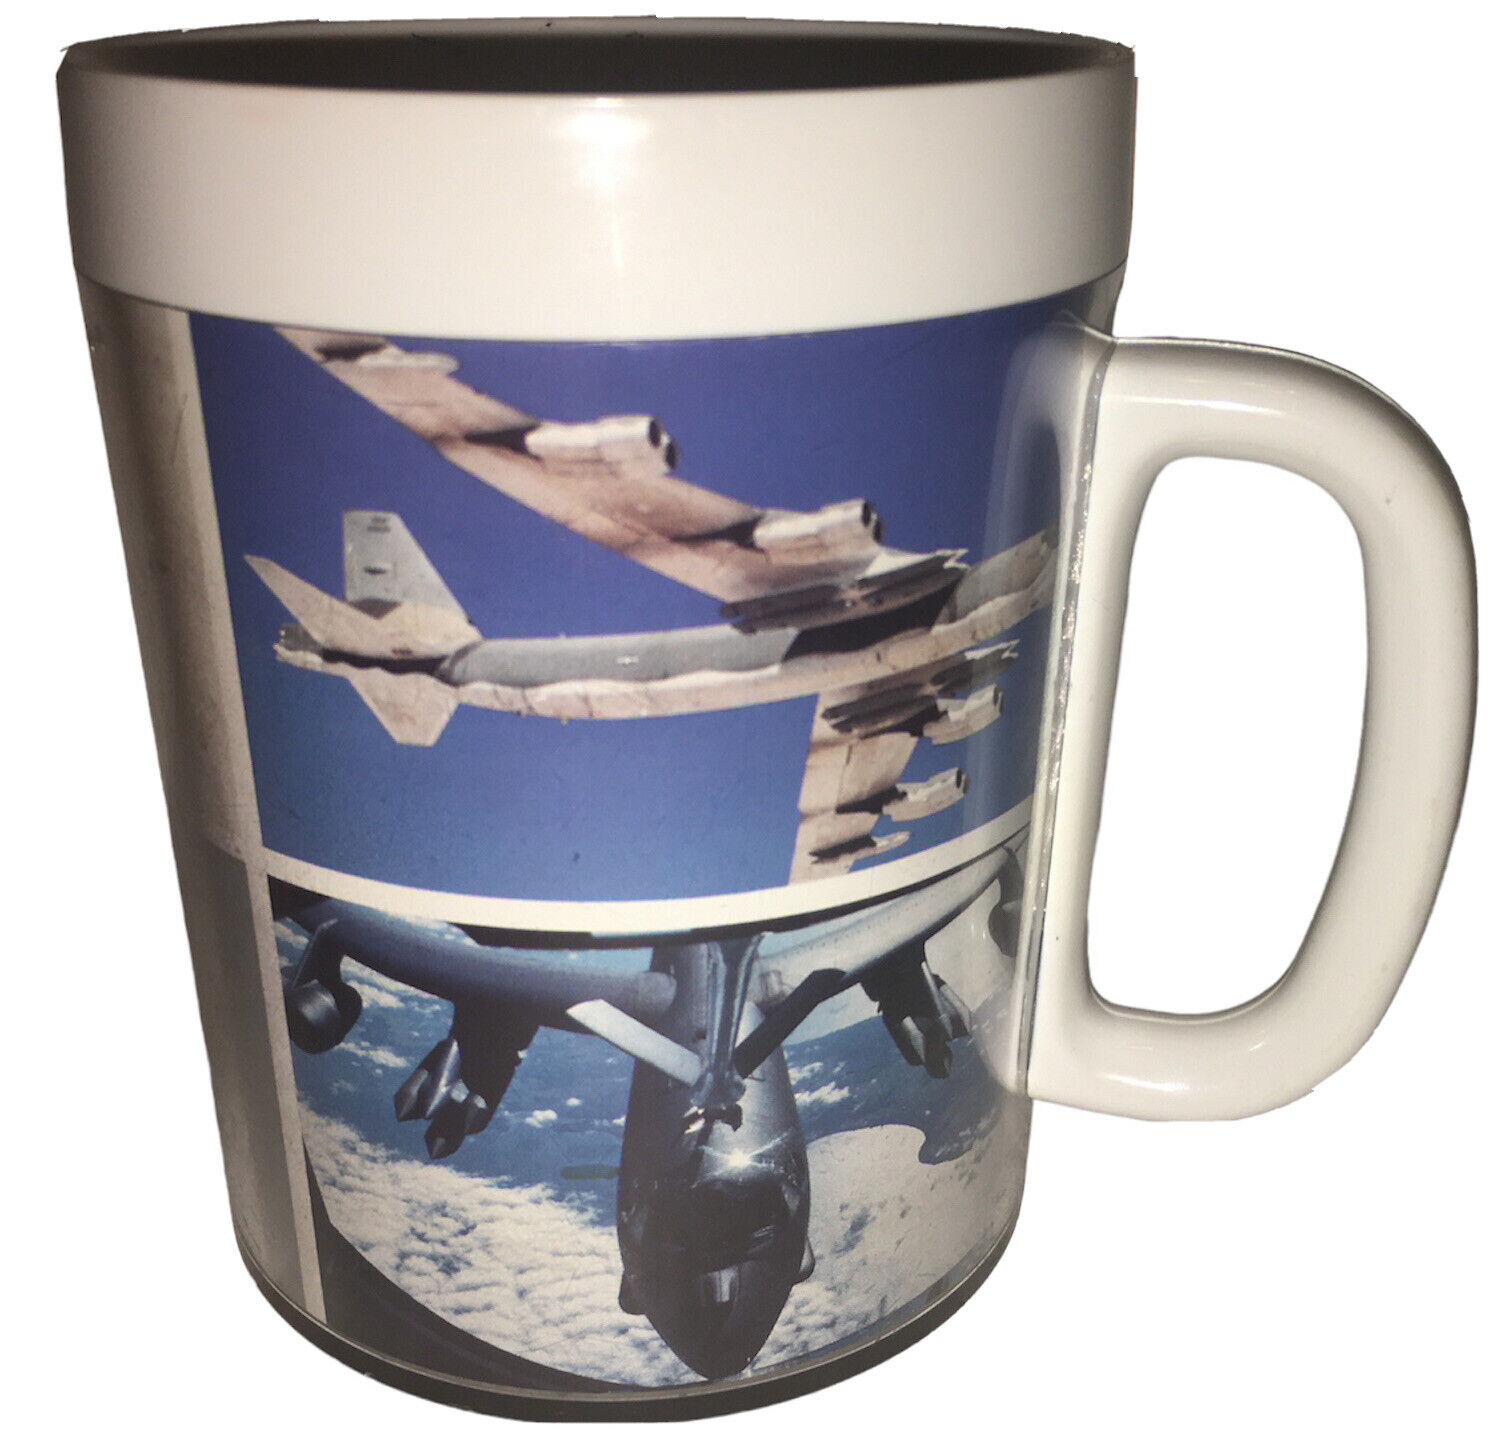 United States Air Force General Dynamics B-52 & Advance Cruise Missile Mug Cup